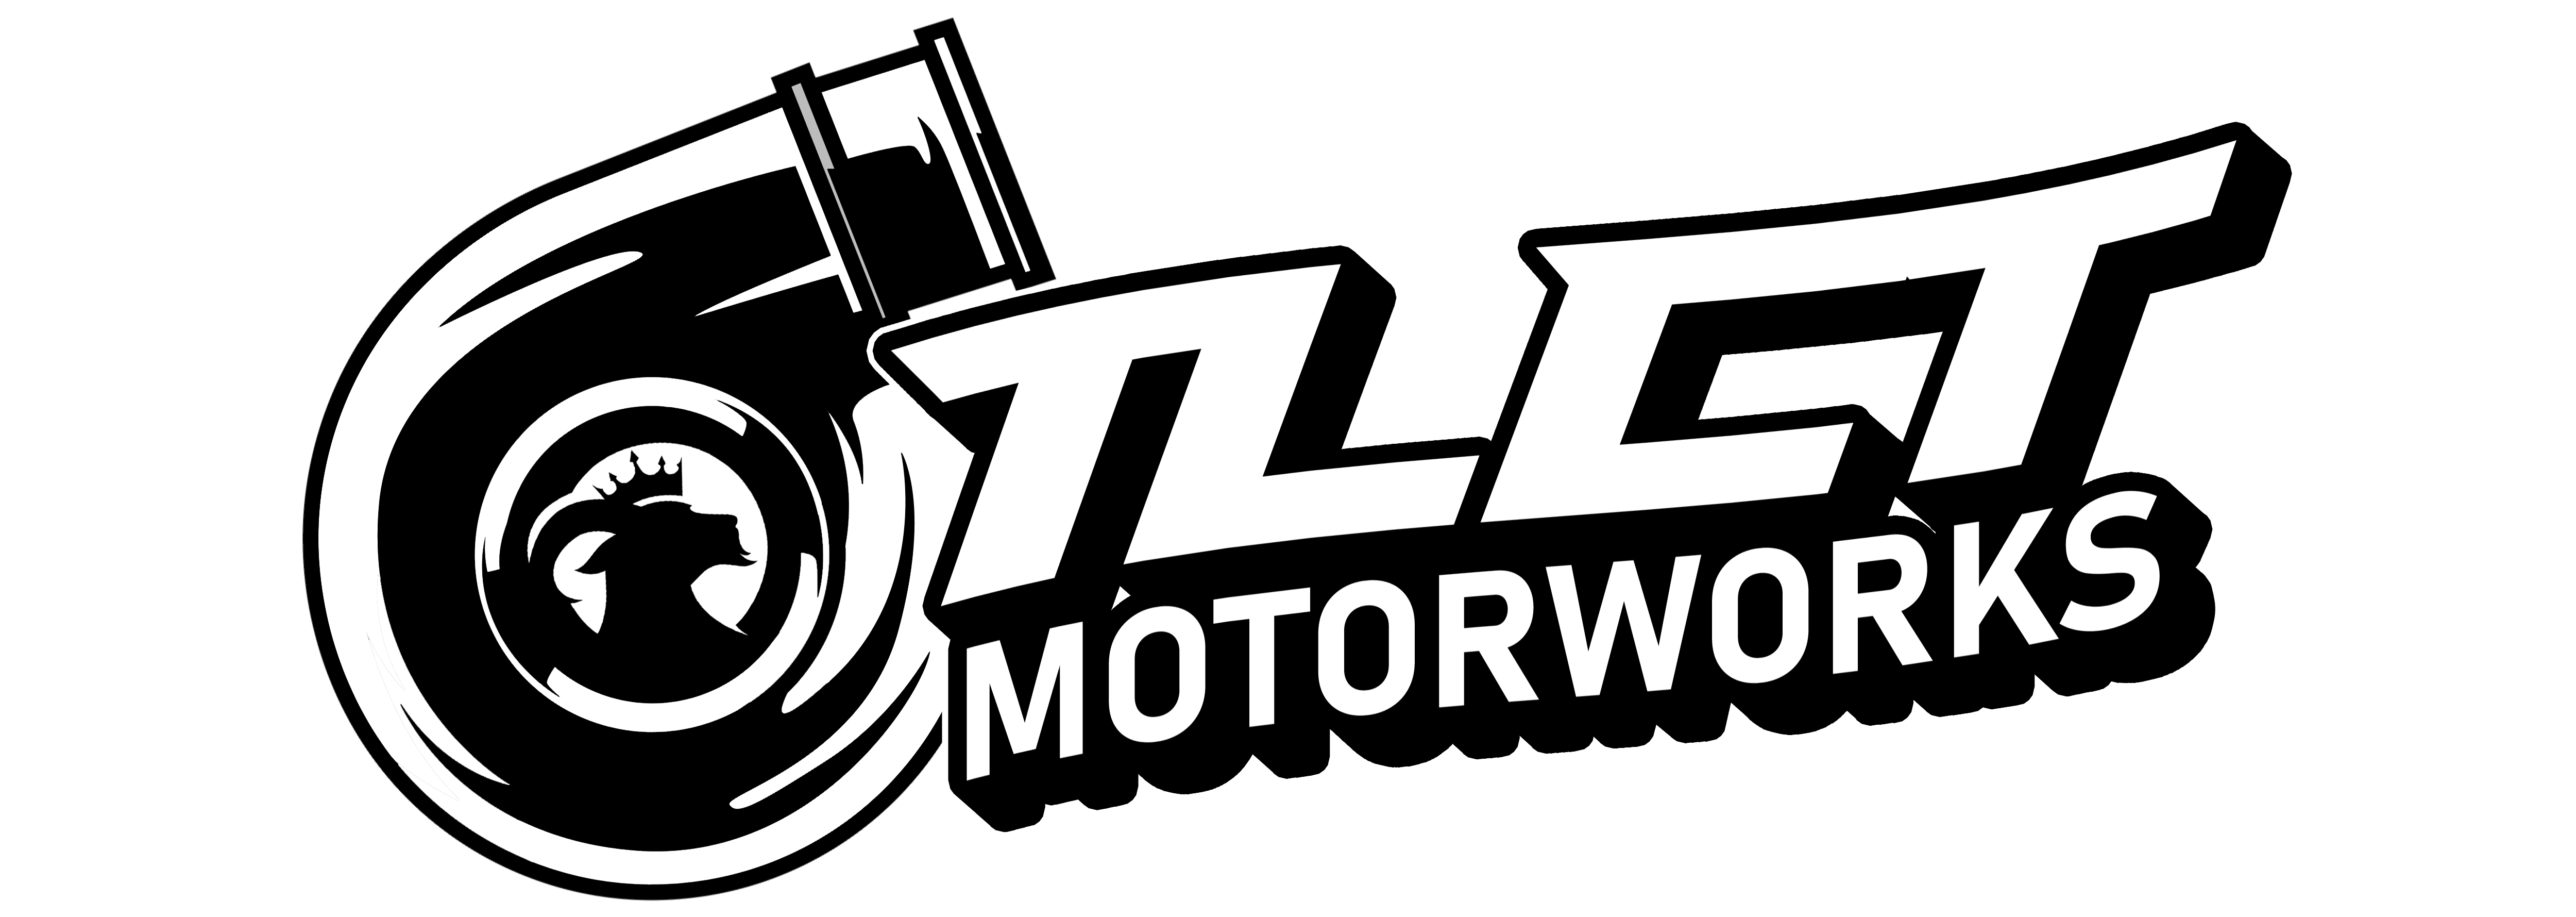 TLCT Motorworks